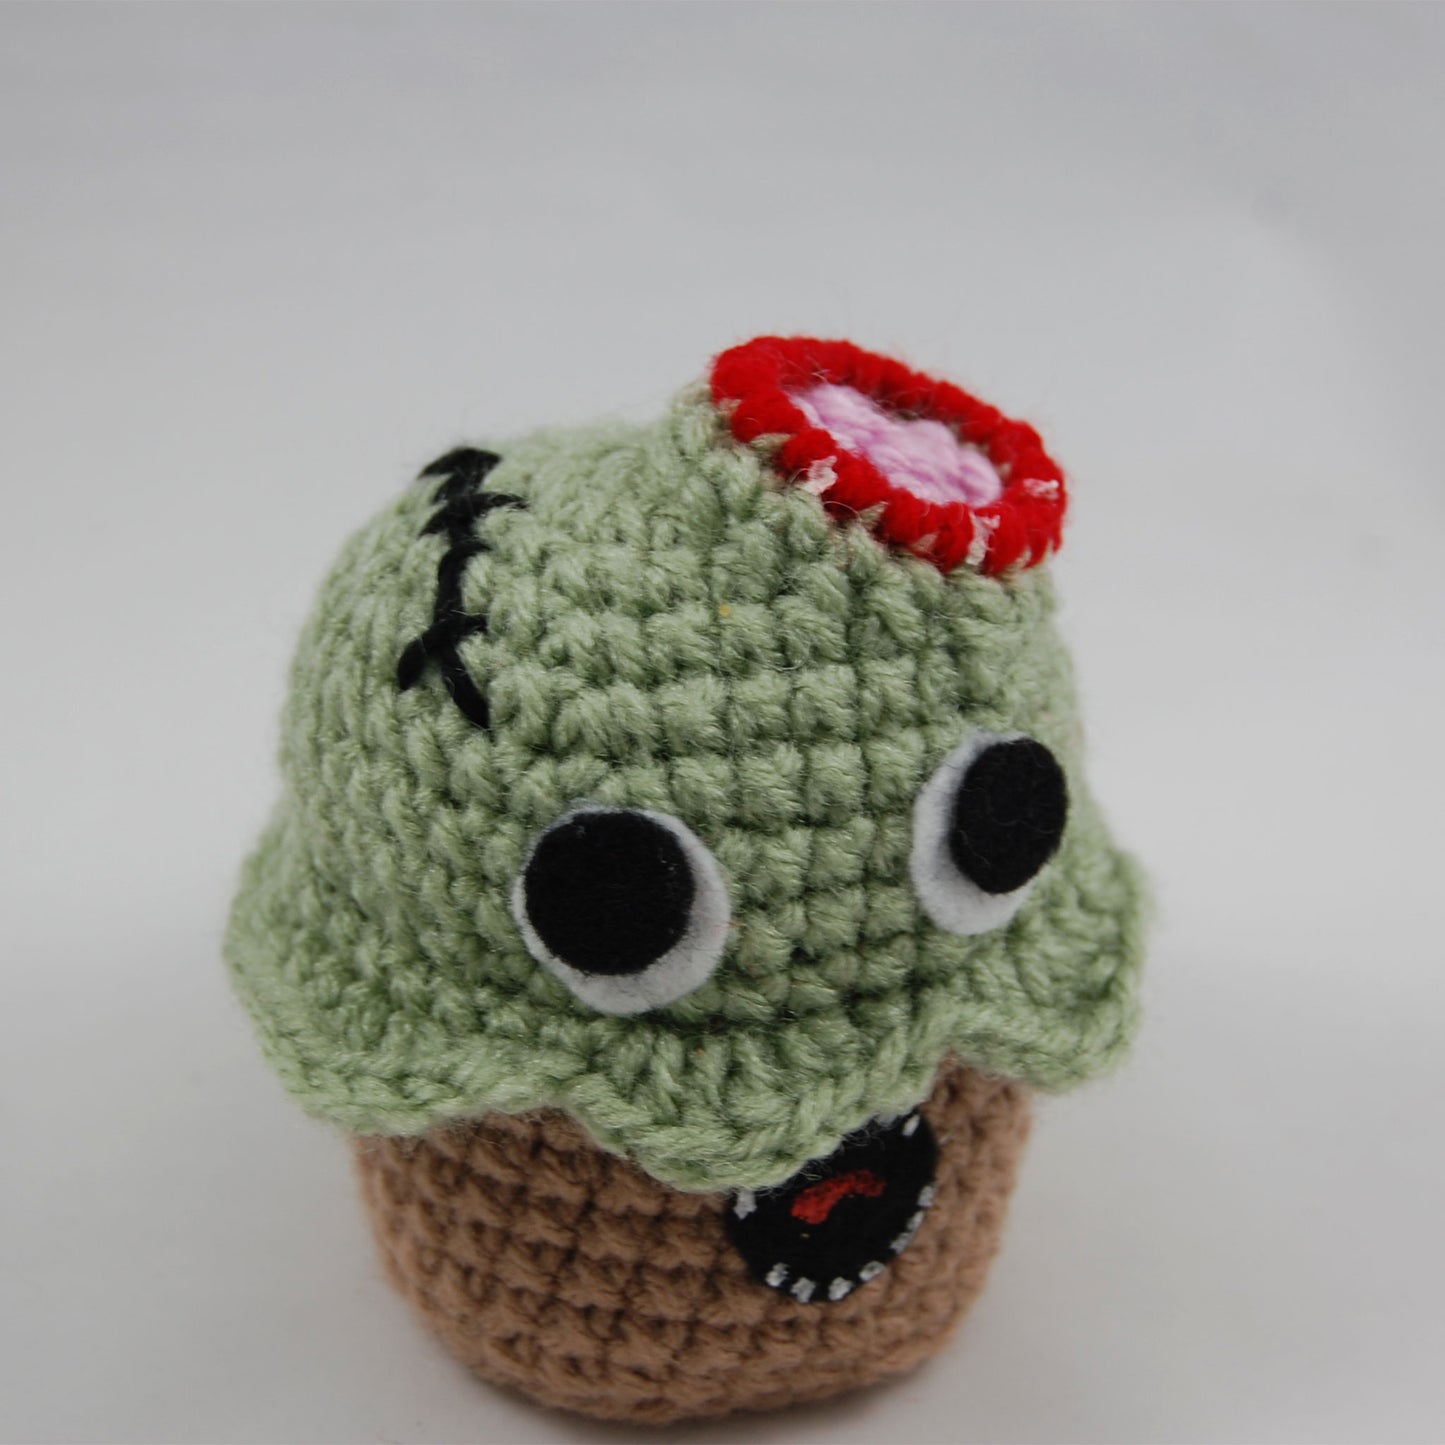 Head Bite Zombie Crochet Cupcake